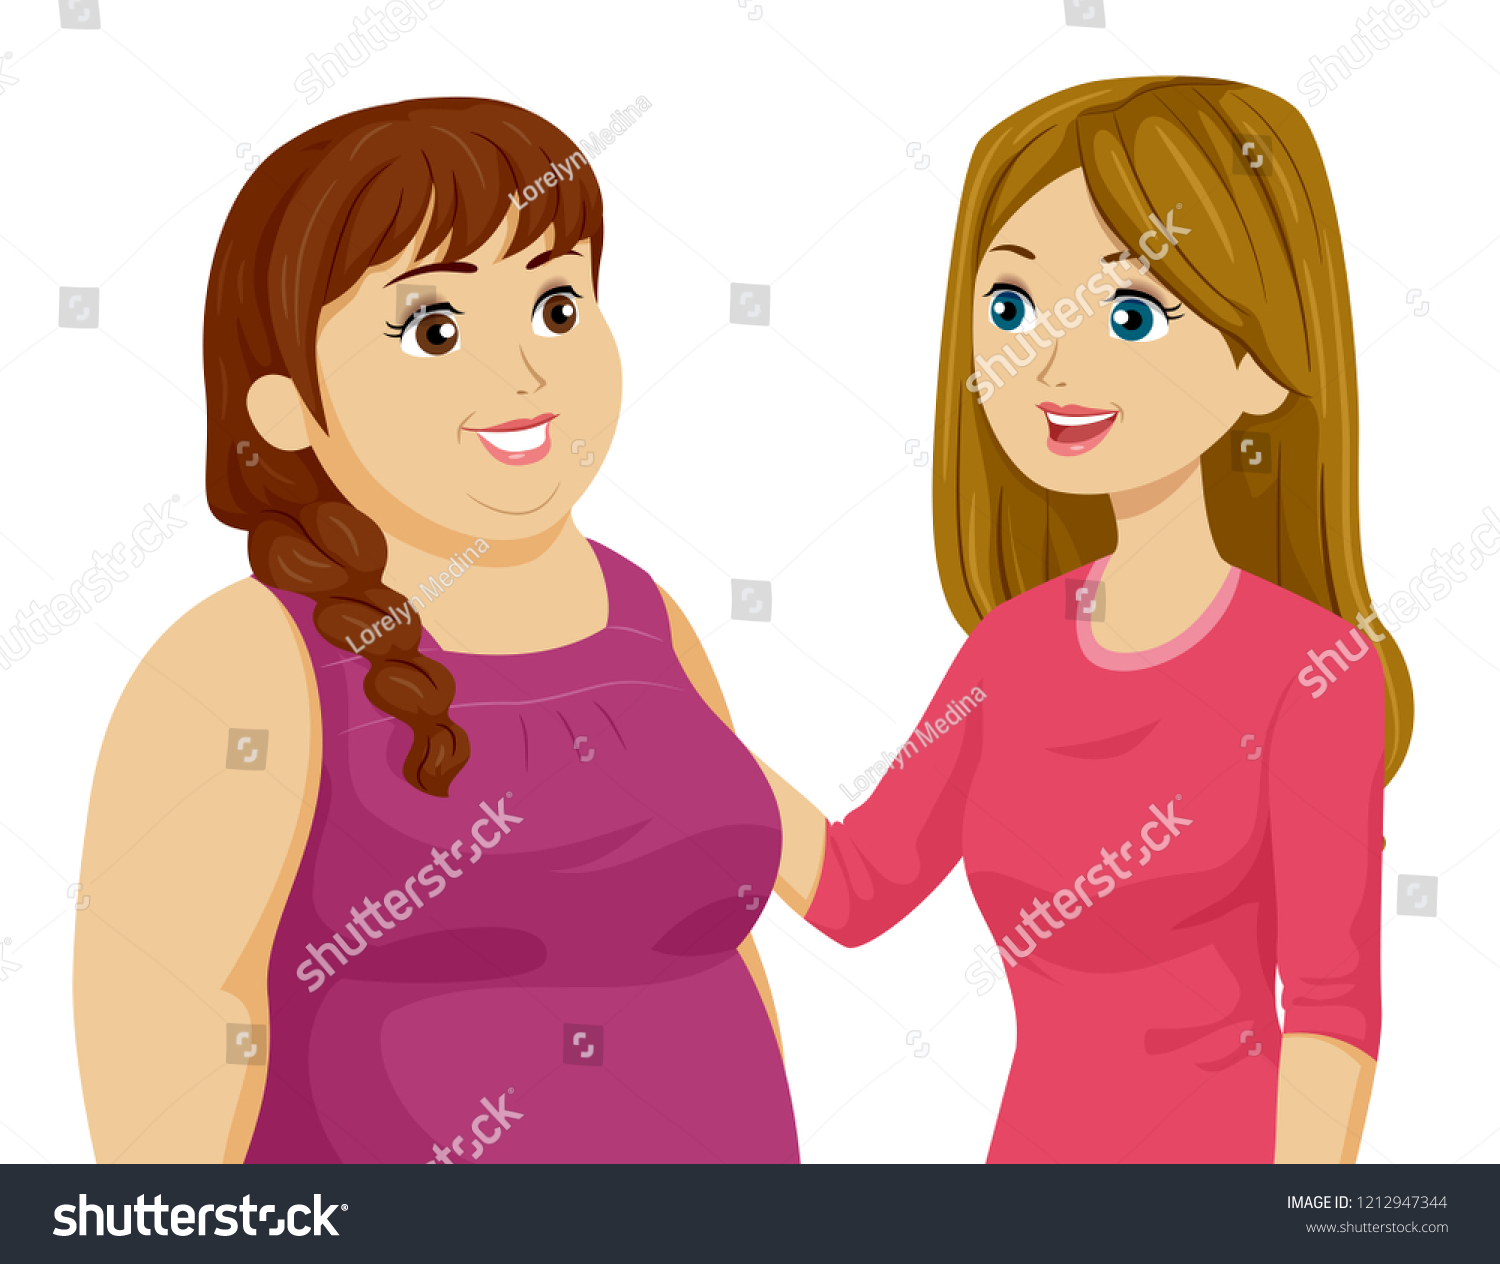 Illustration Teenage Girls Talking Each Other Stock Vector Royalty Free 1212947344 Shutterstock